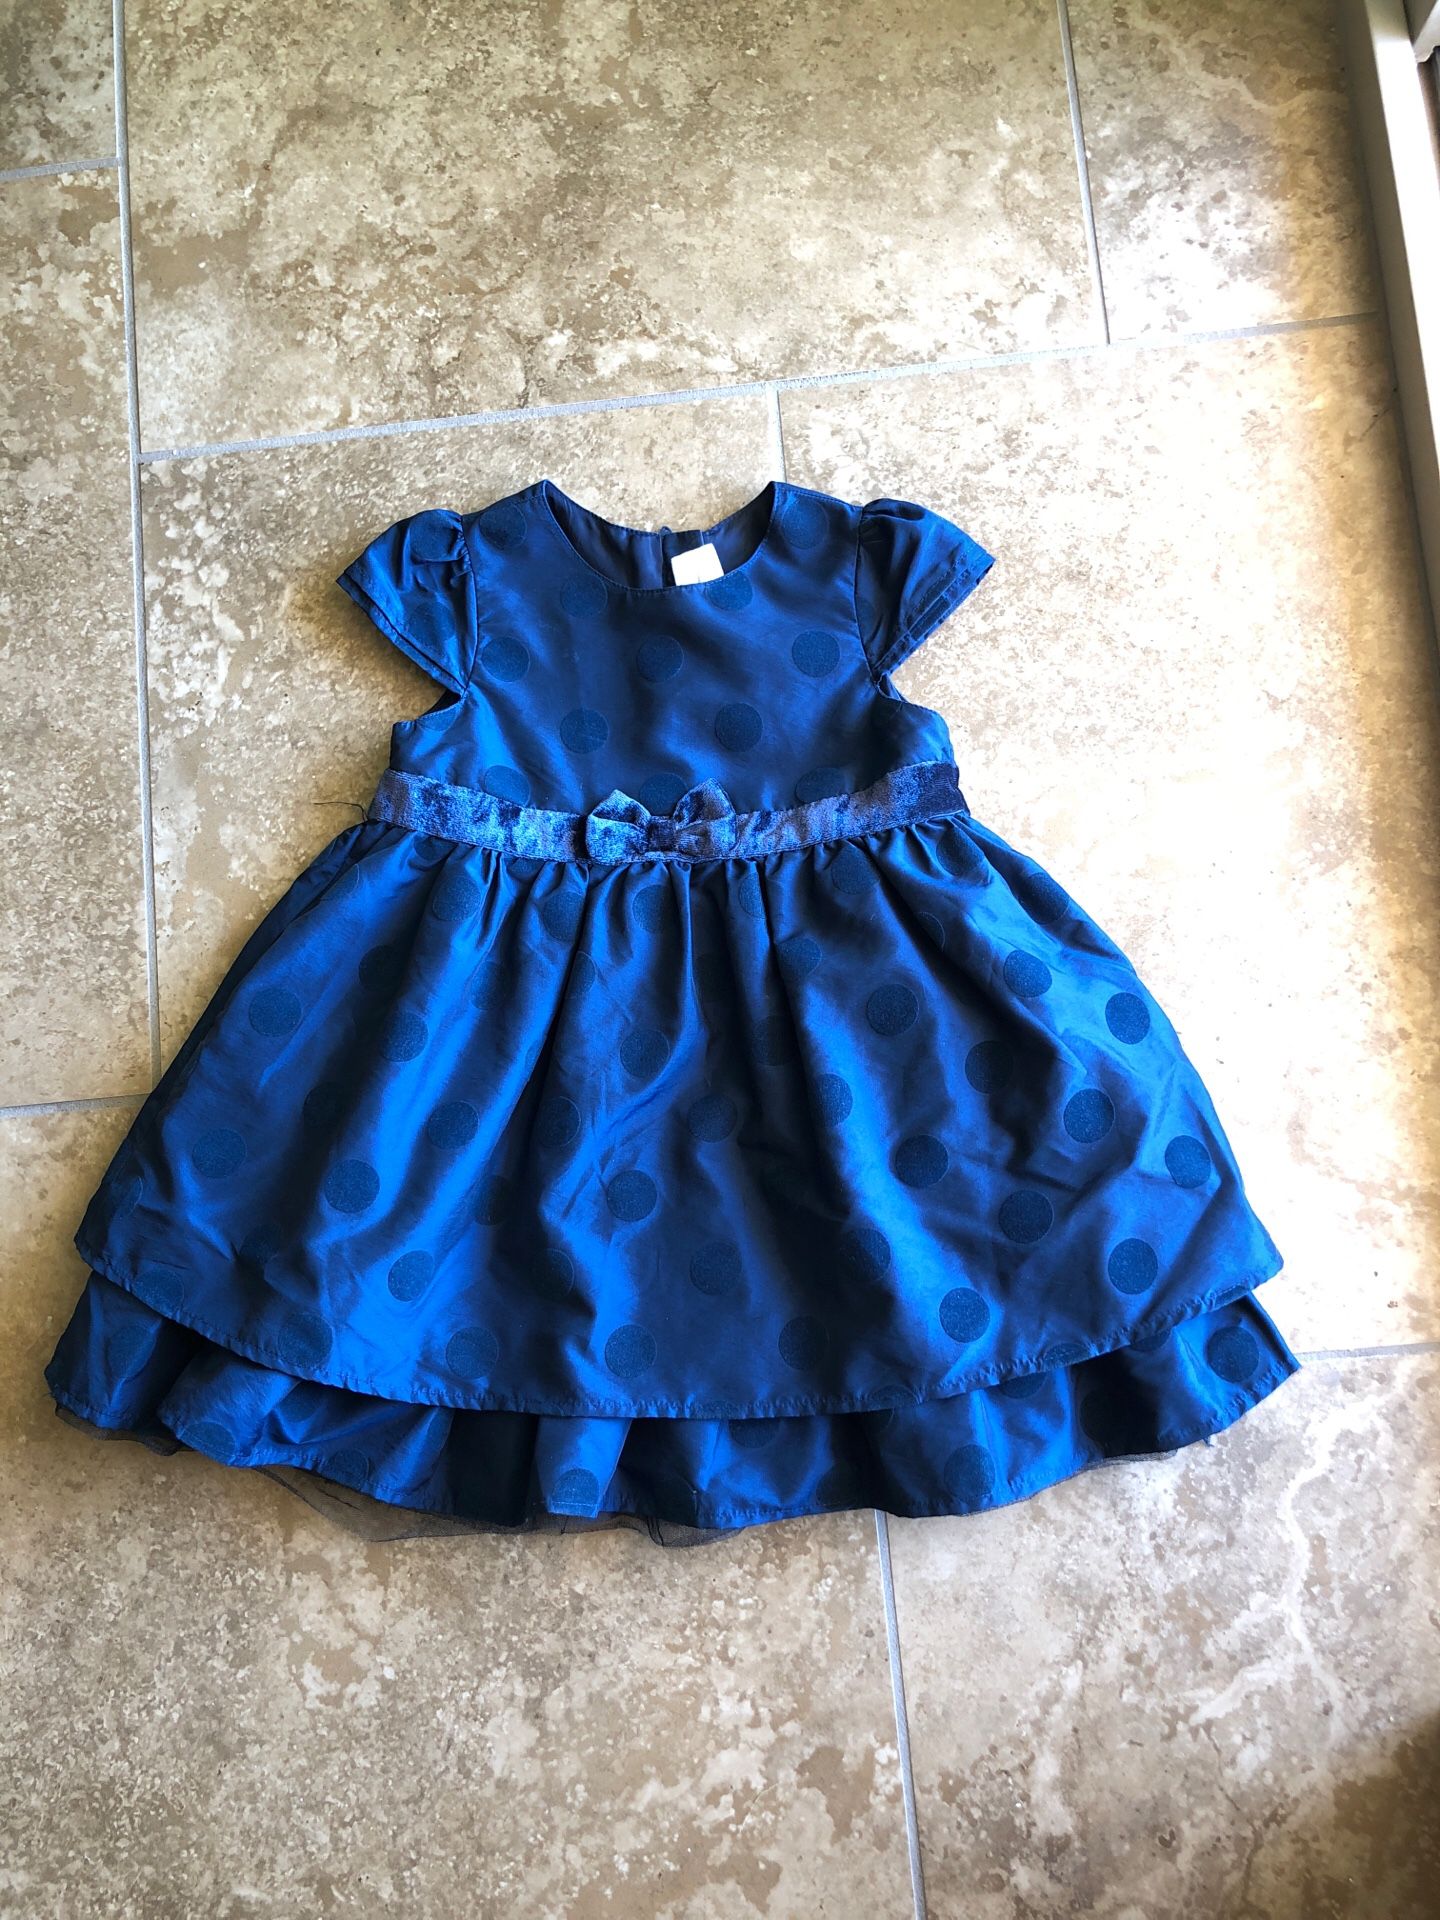 H&M Toddler Girl Blue Easter Dress Size 12-18 months